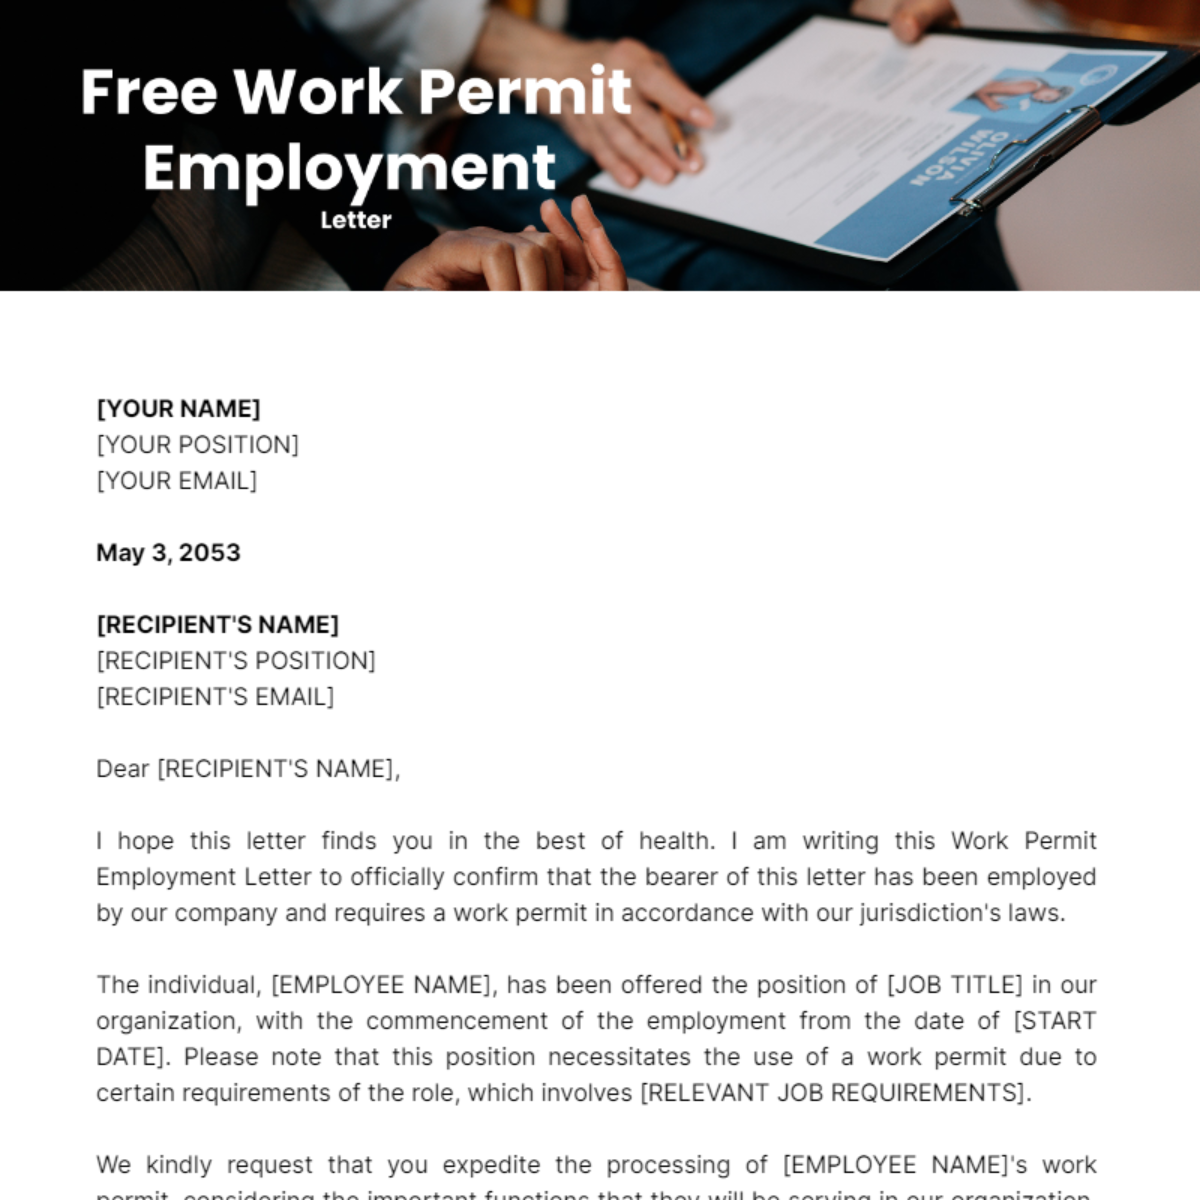 Work Permit Employment Letter Template